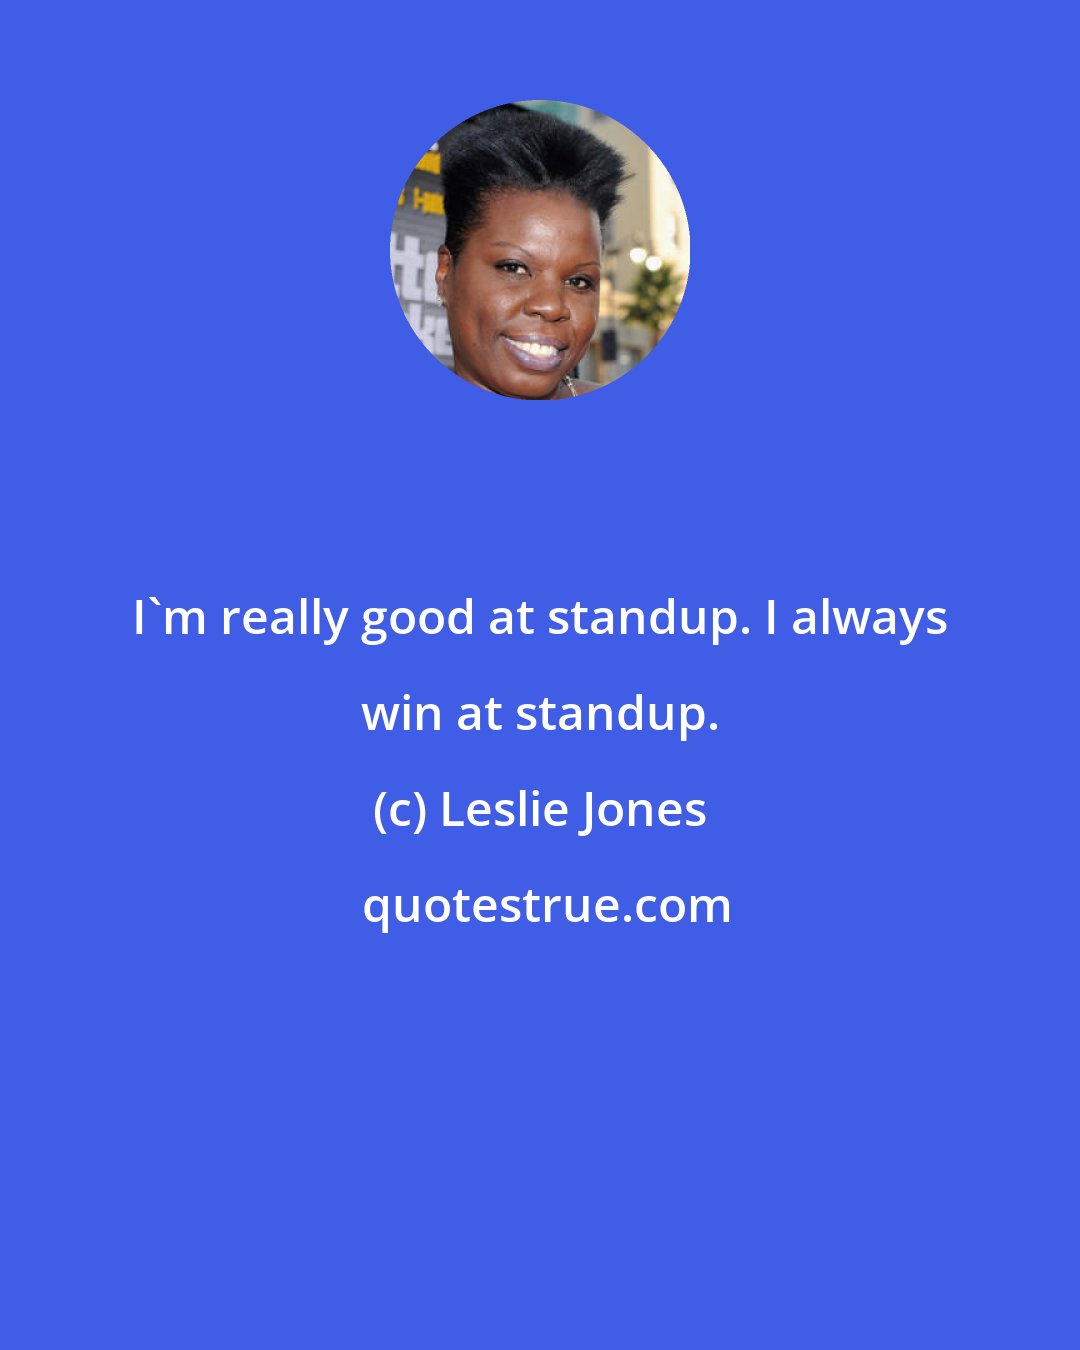 Leslie Jones: I'm really good at standup. I always win at standup.